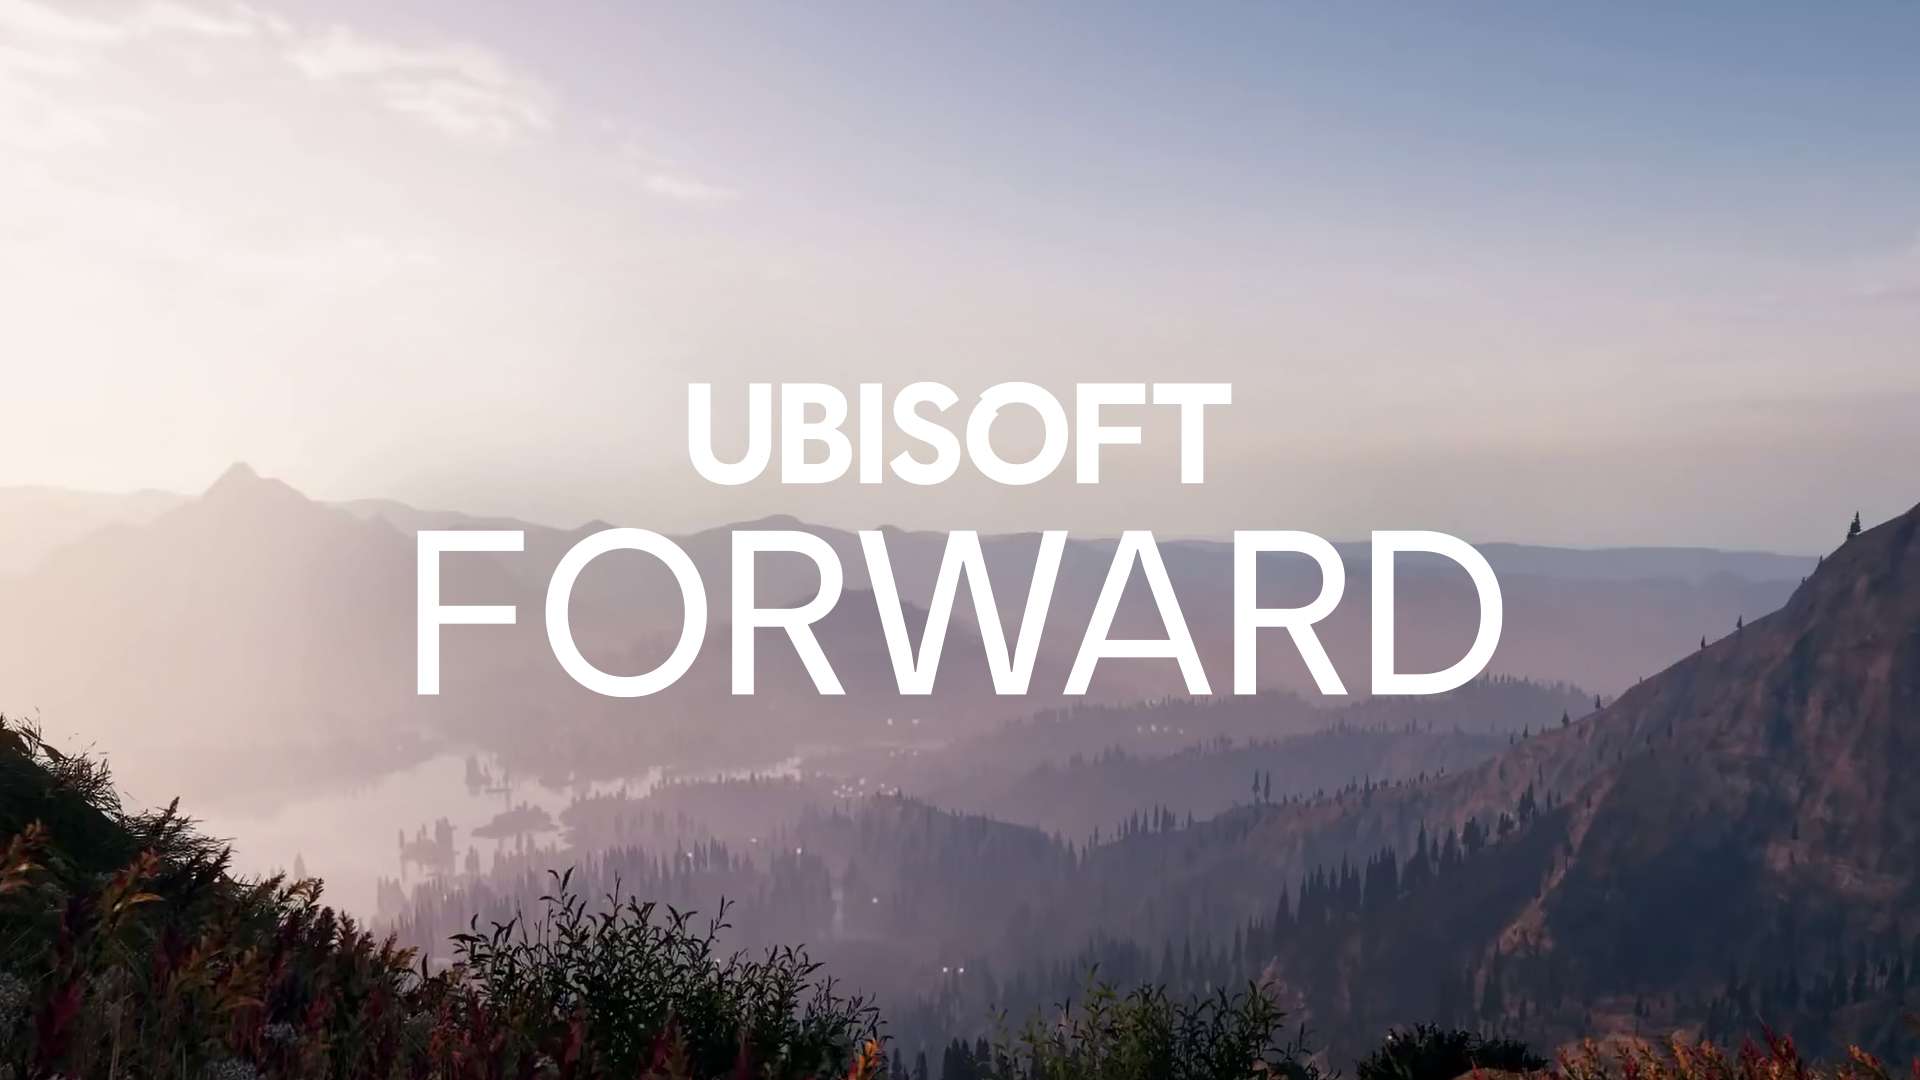 Sigue aquí el Ubisoft Forward en directo